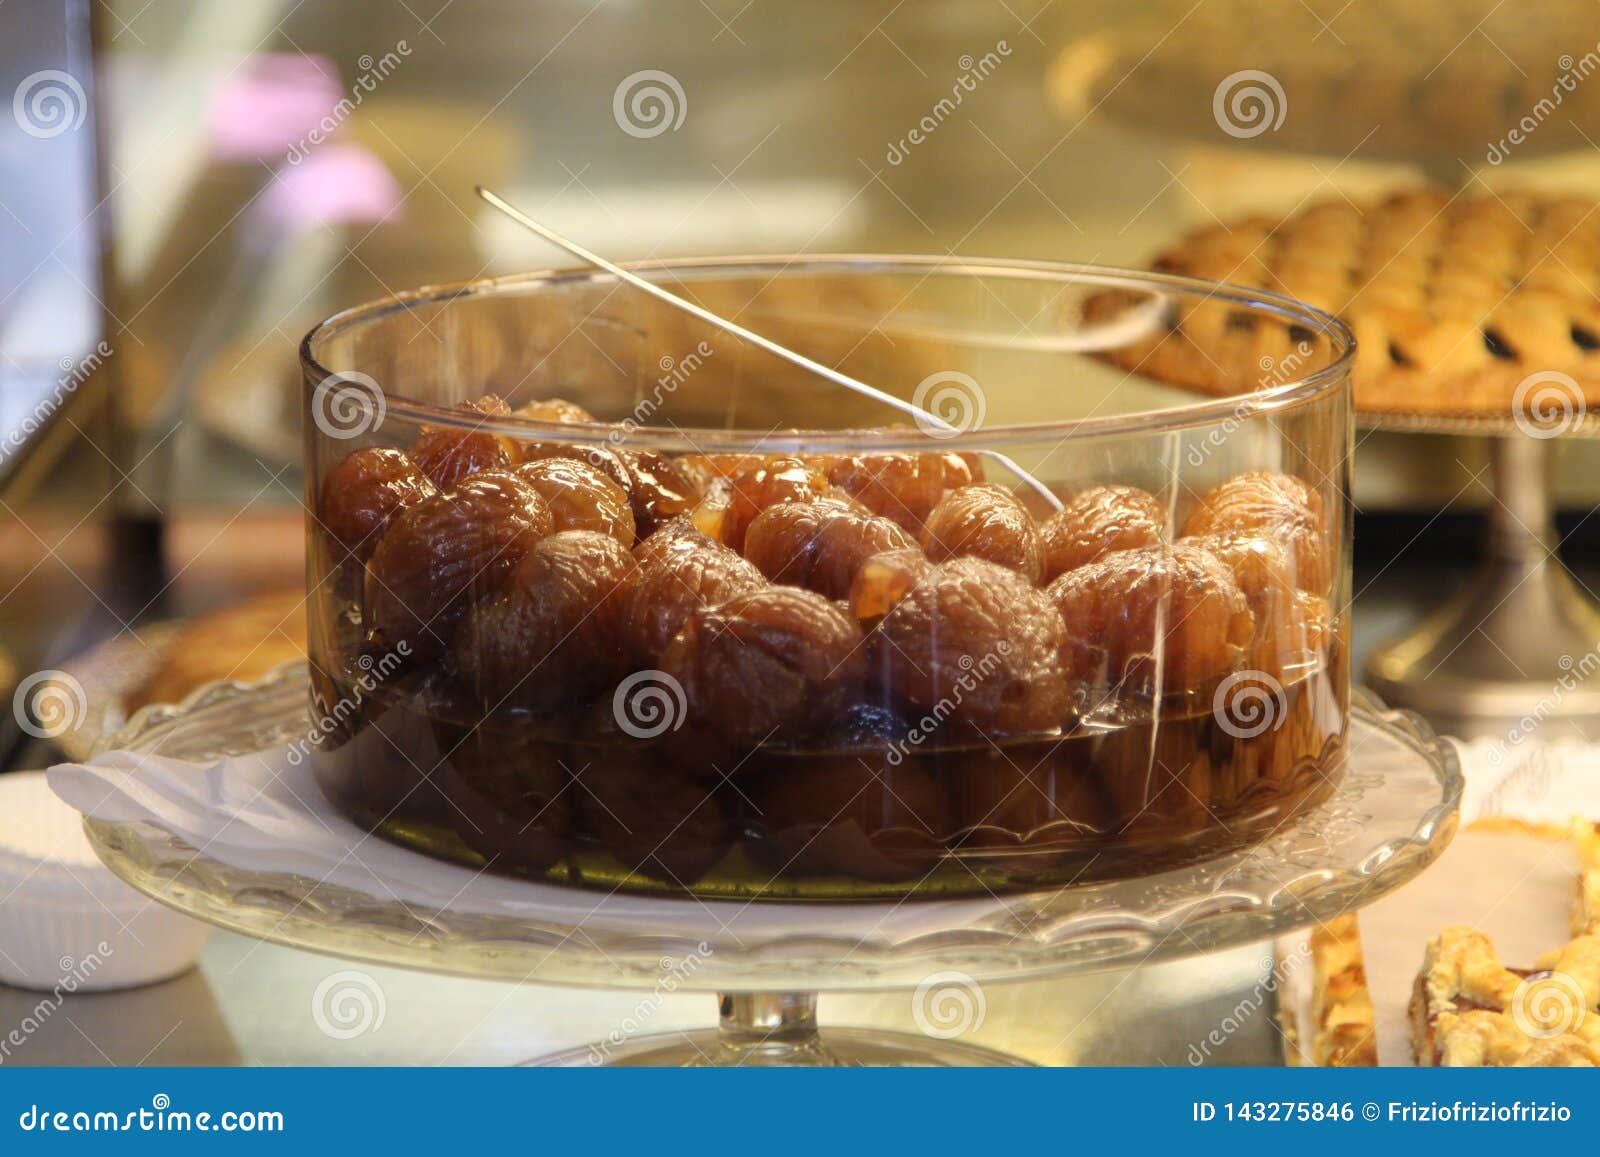 marron glacÃÂ© in a pastry shop window